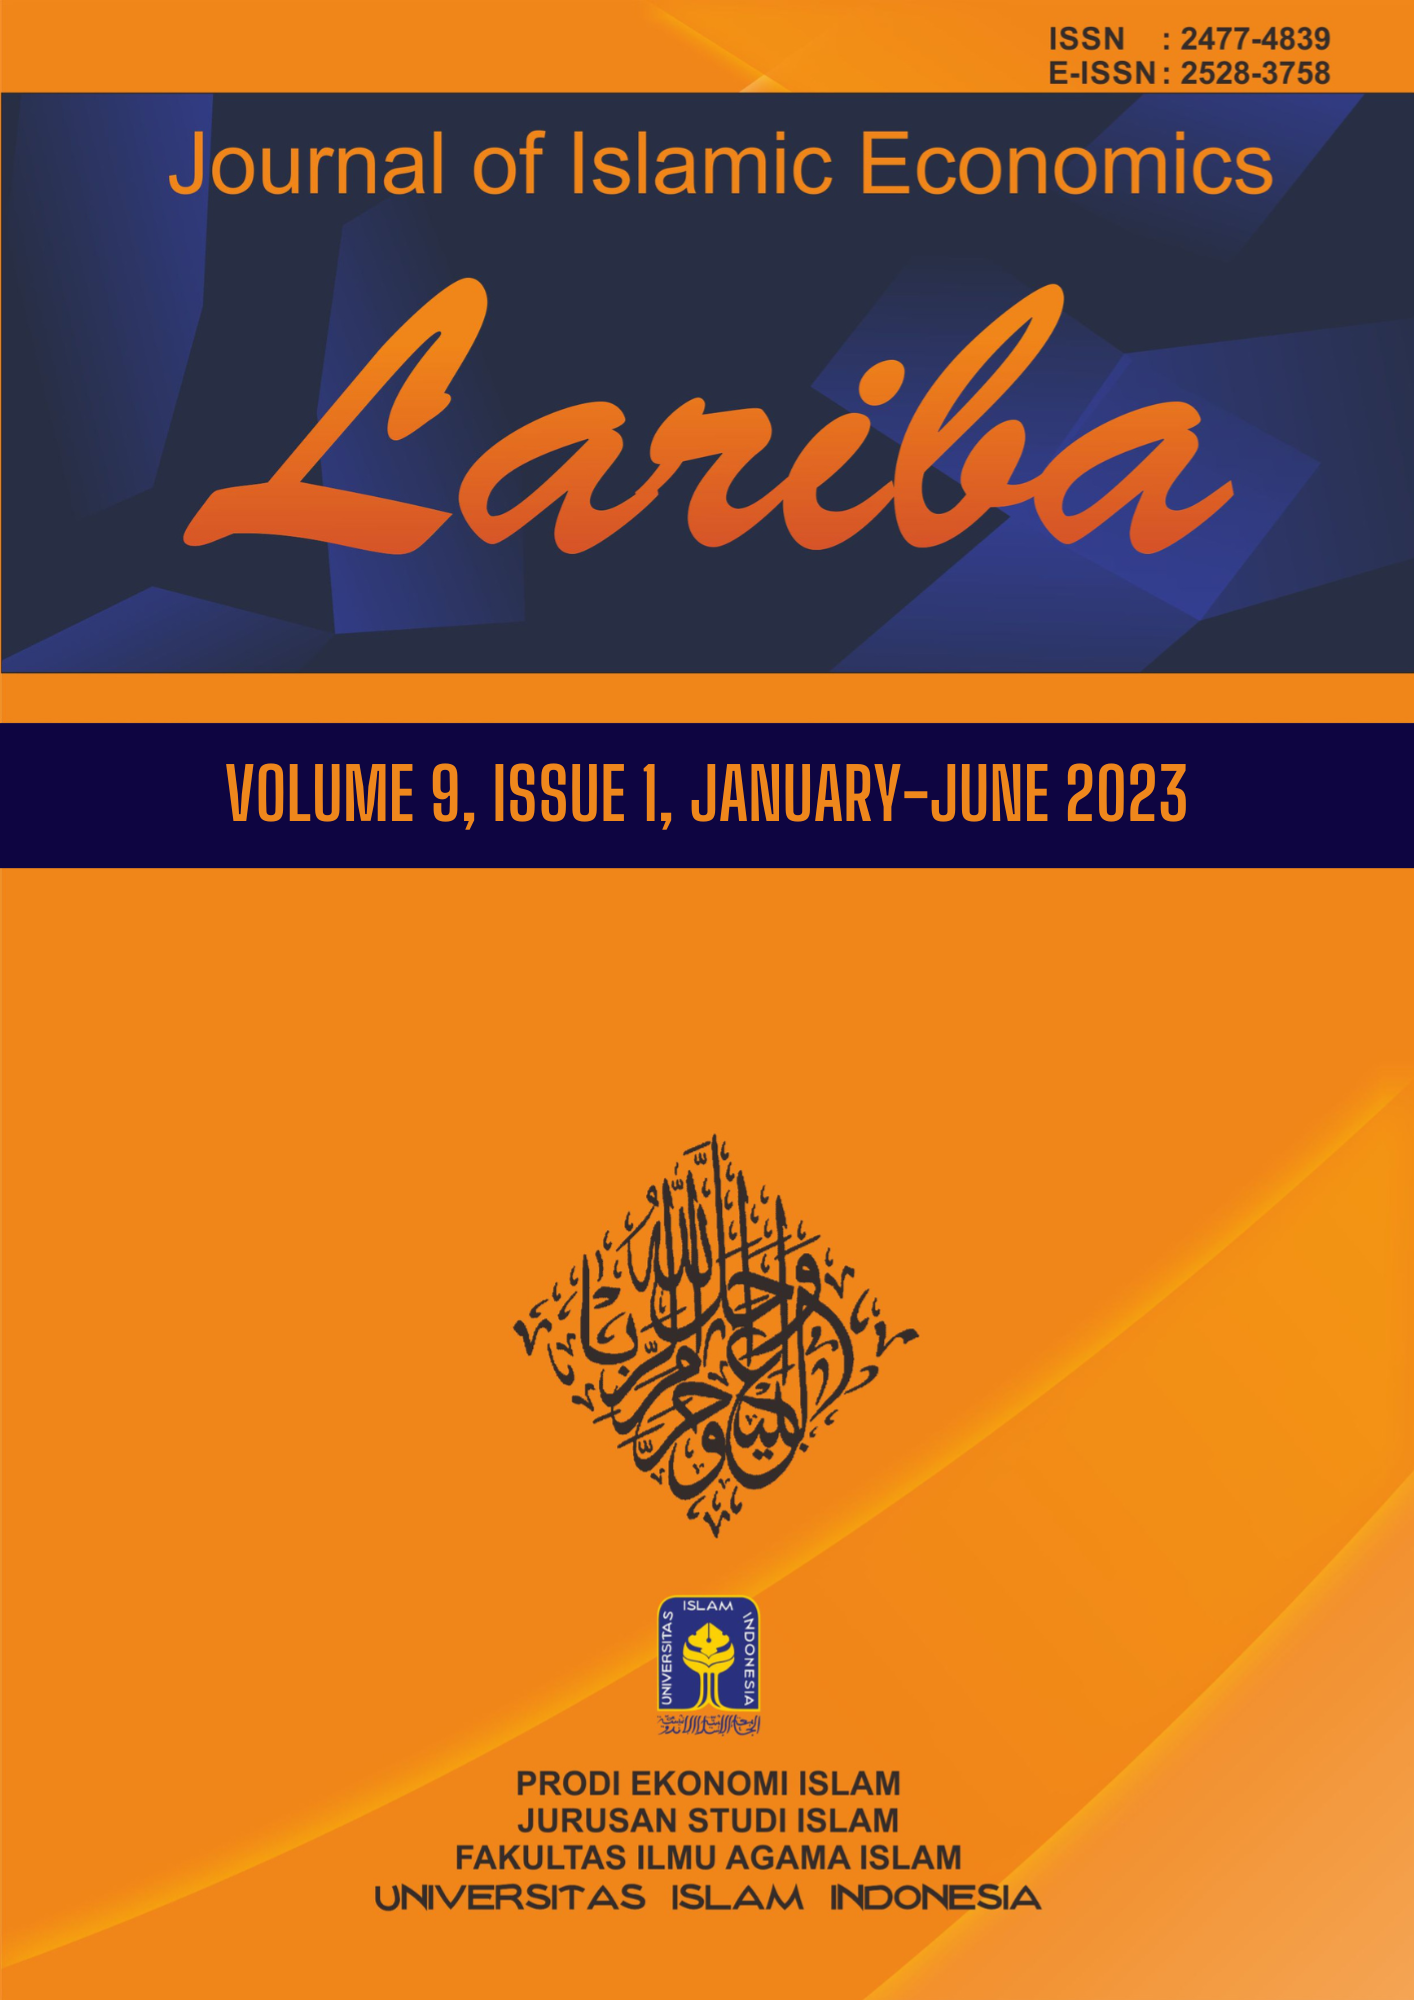 Journal of Islamic Economics Lariba Vol 9 Iss 1 2023